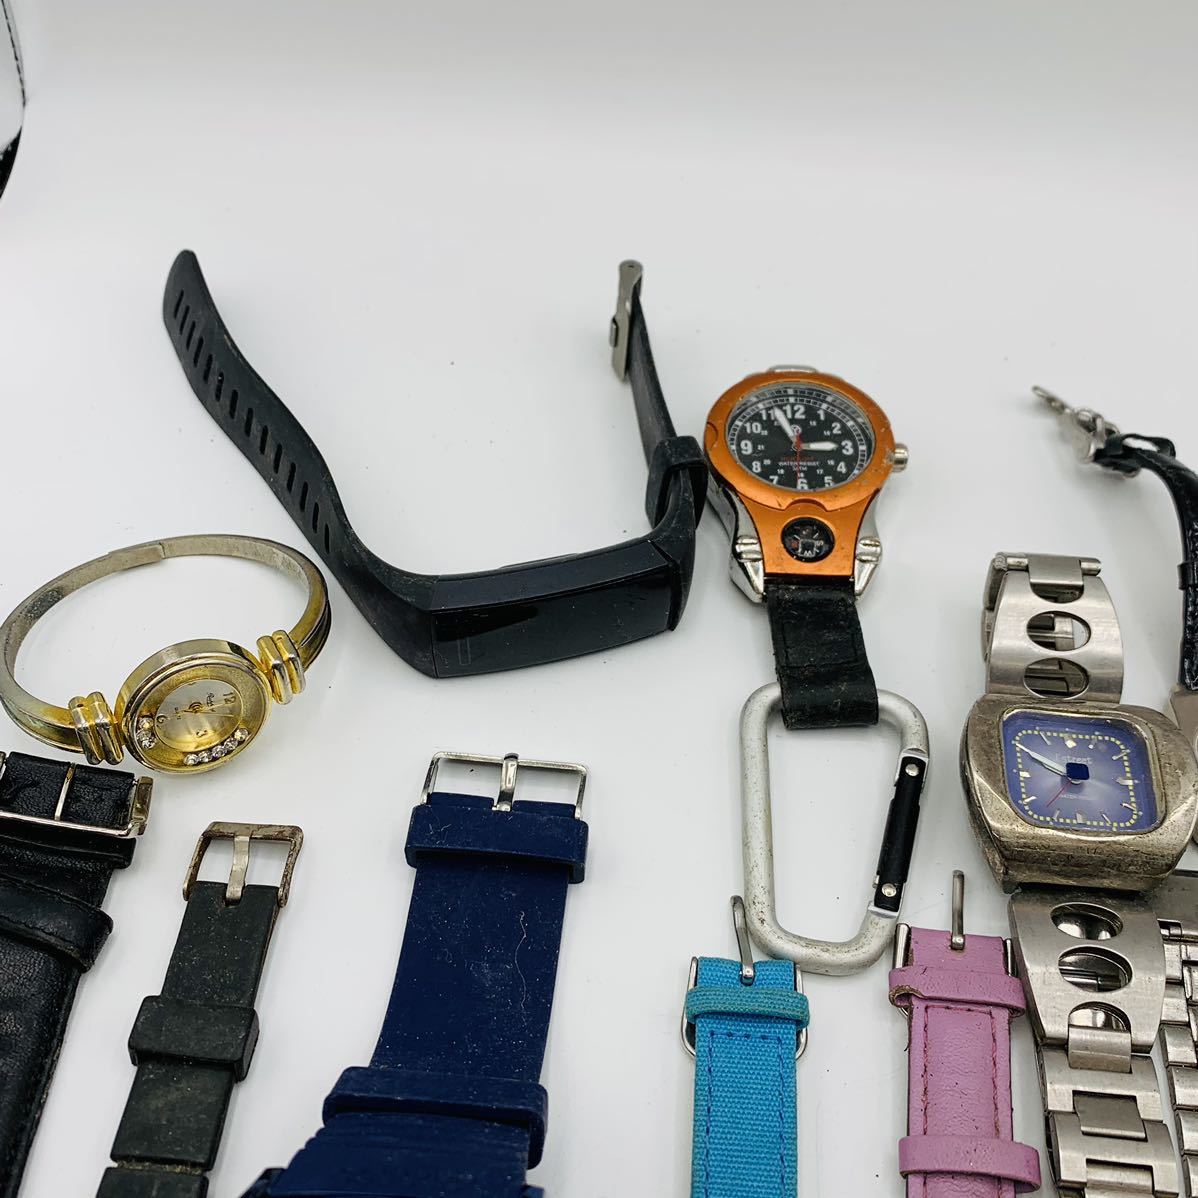 HG1 262 時計20点 まとめ売り まとめて 大量 腕時計 懐中時計 SEIKO セイコー FOSSIL フォッシル デジタル スマートウォッチ カレンダー TY_画像2